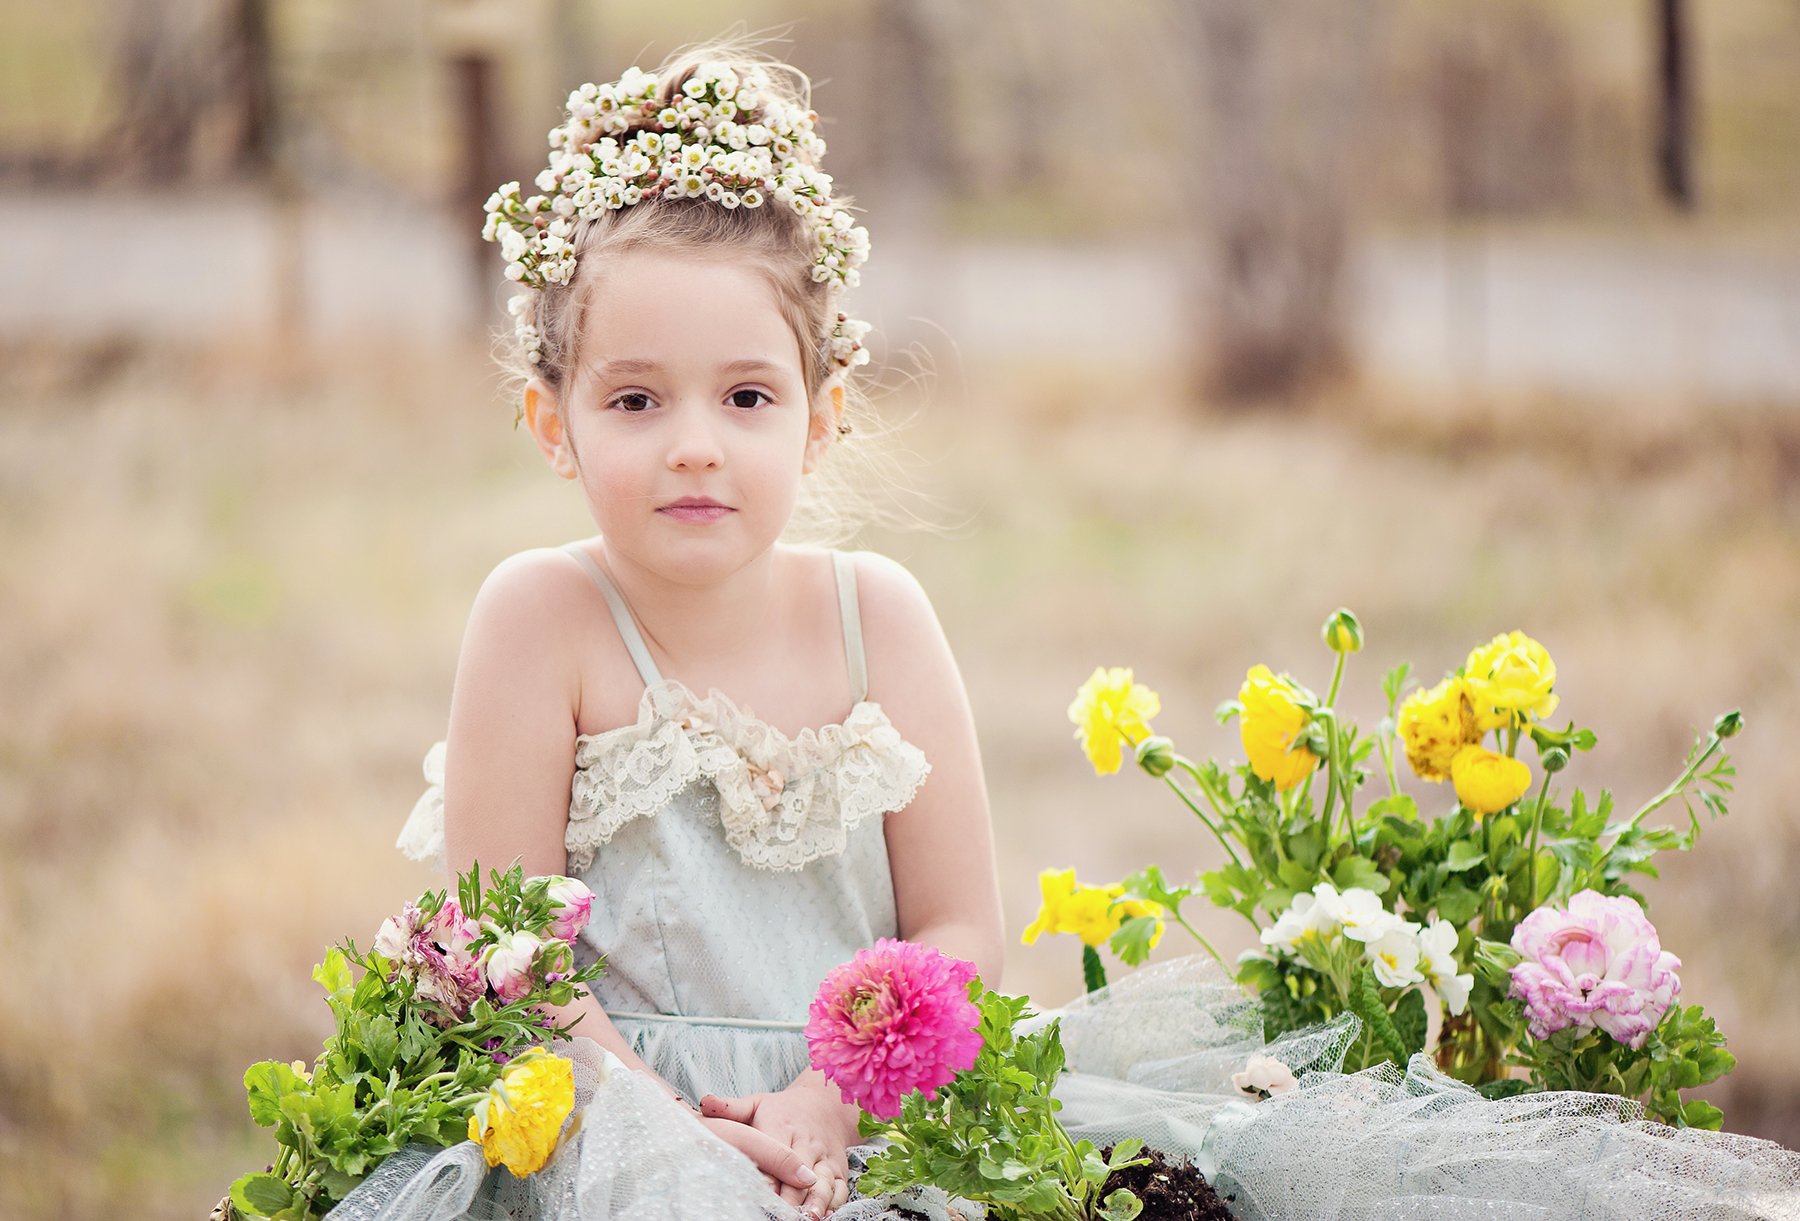 Lemaire-Littlegirl-flower-photography.jpg